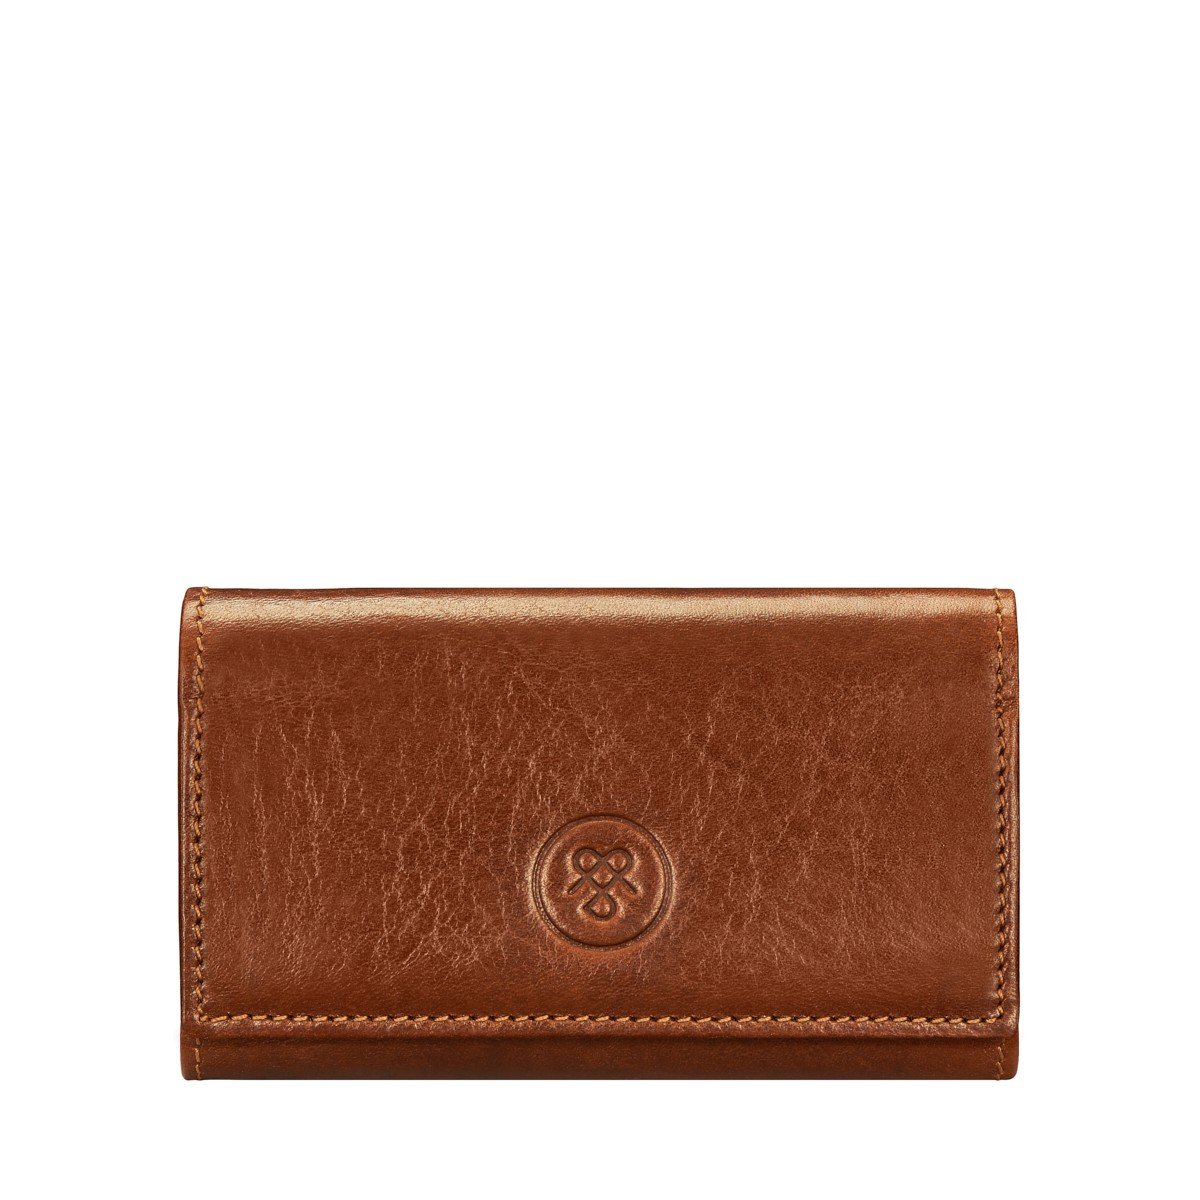 Maxwell Scott Bags - Tan Italian Leather Key Wallet